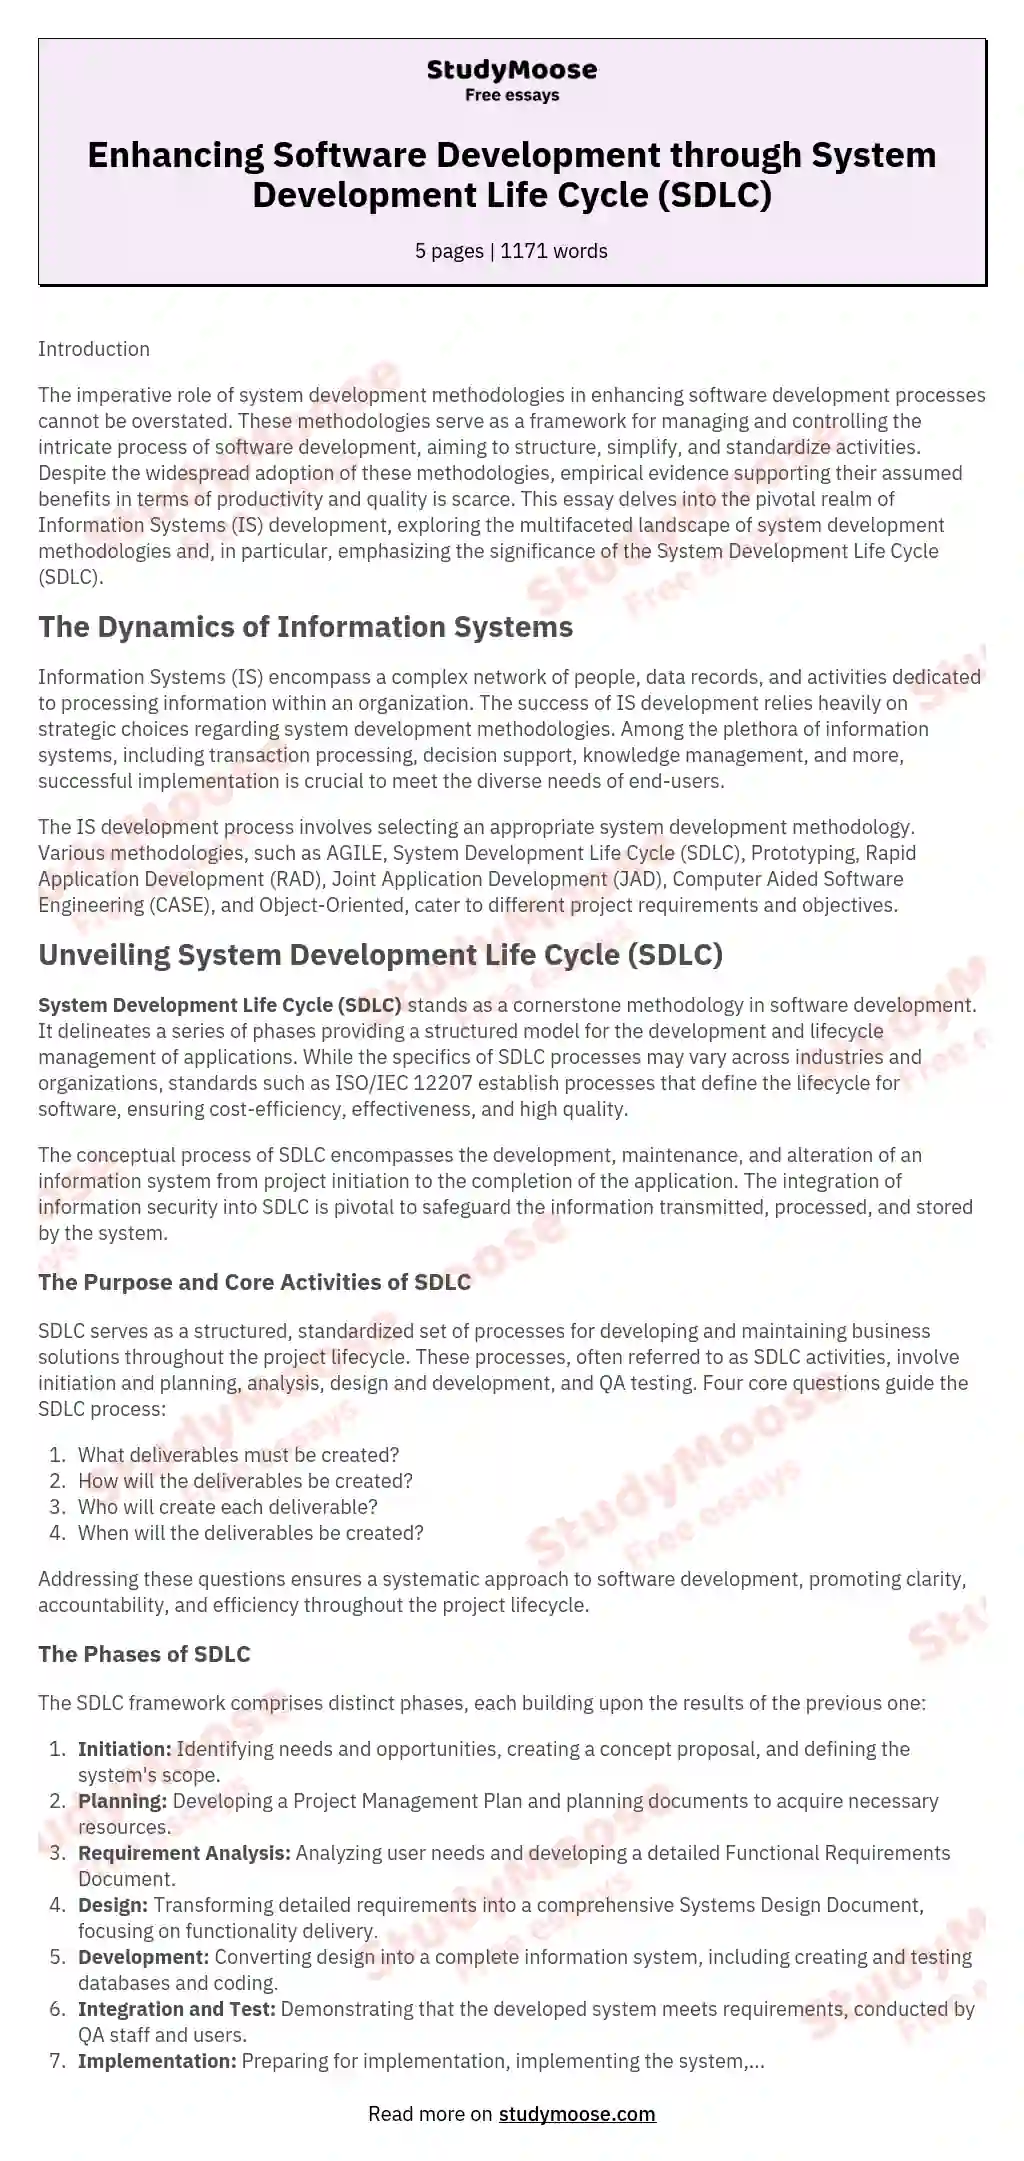 Enhancing Software Development through System Development Life Cycle (SDLC) essay